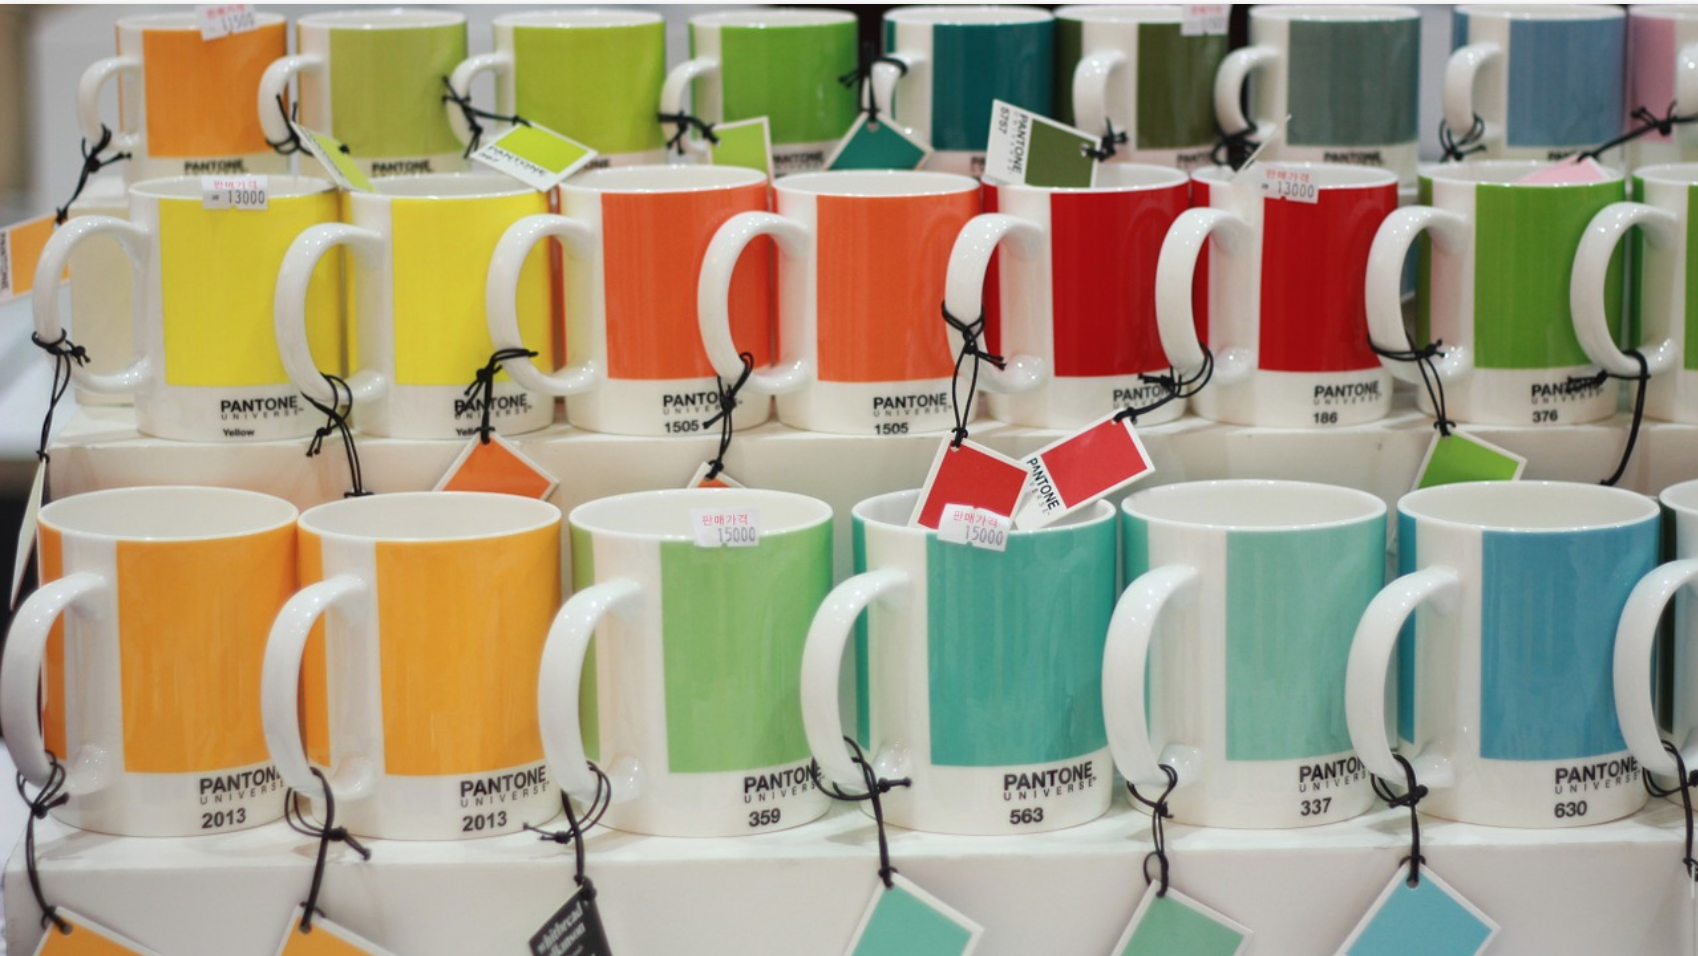 Pantone colour mugs